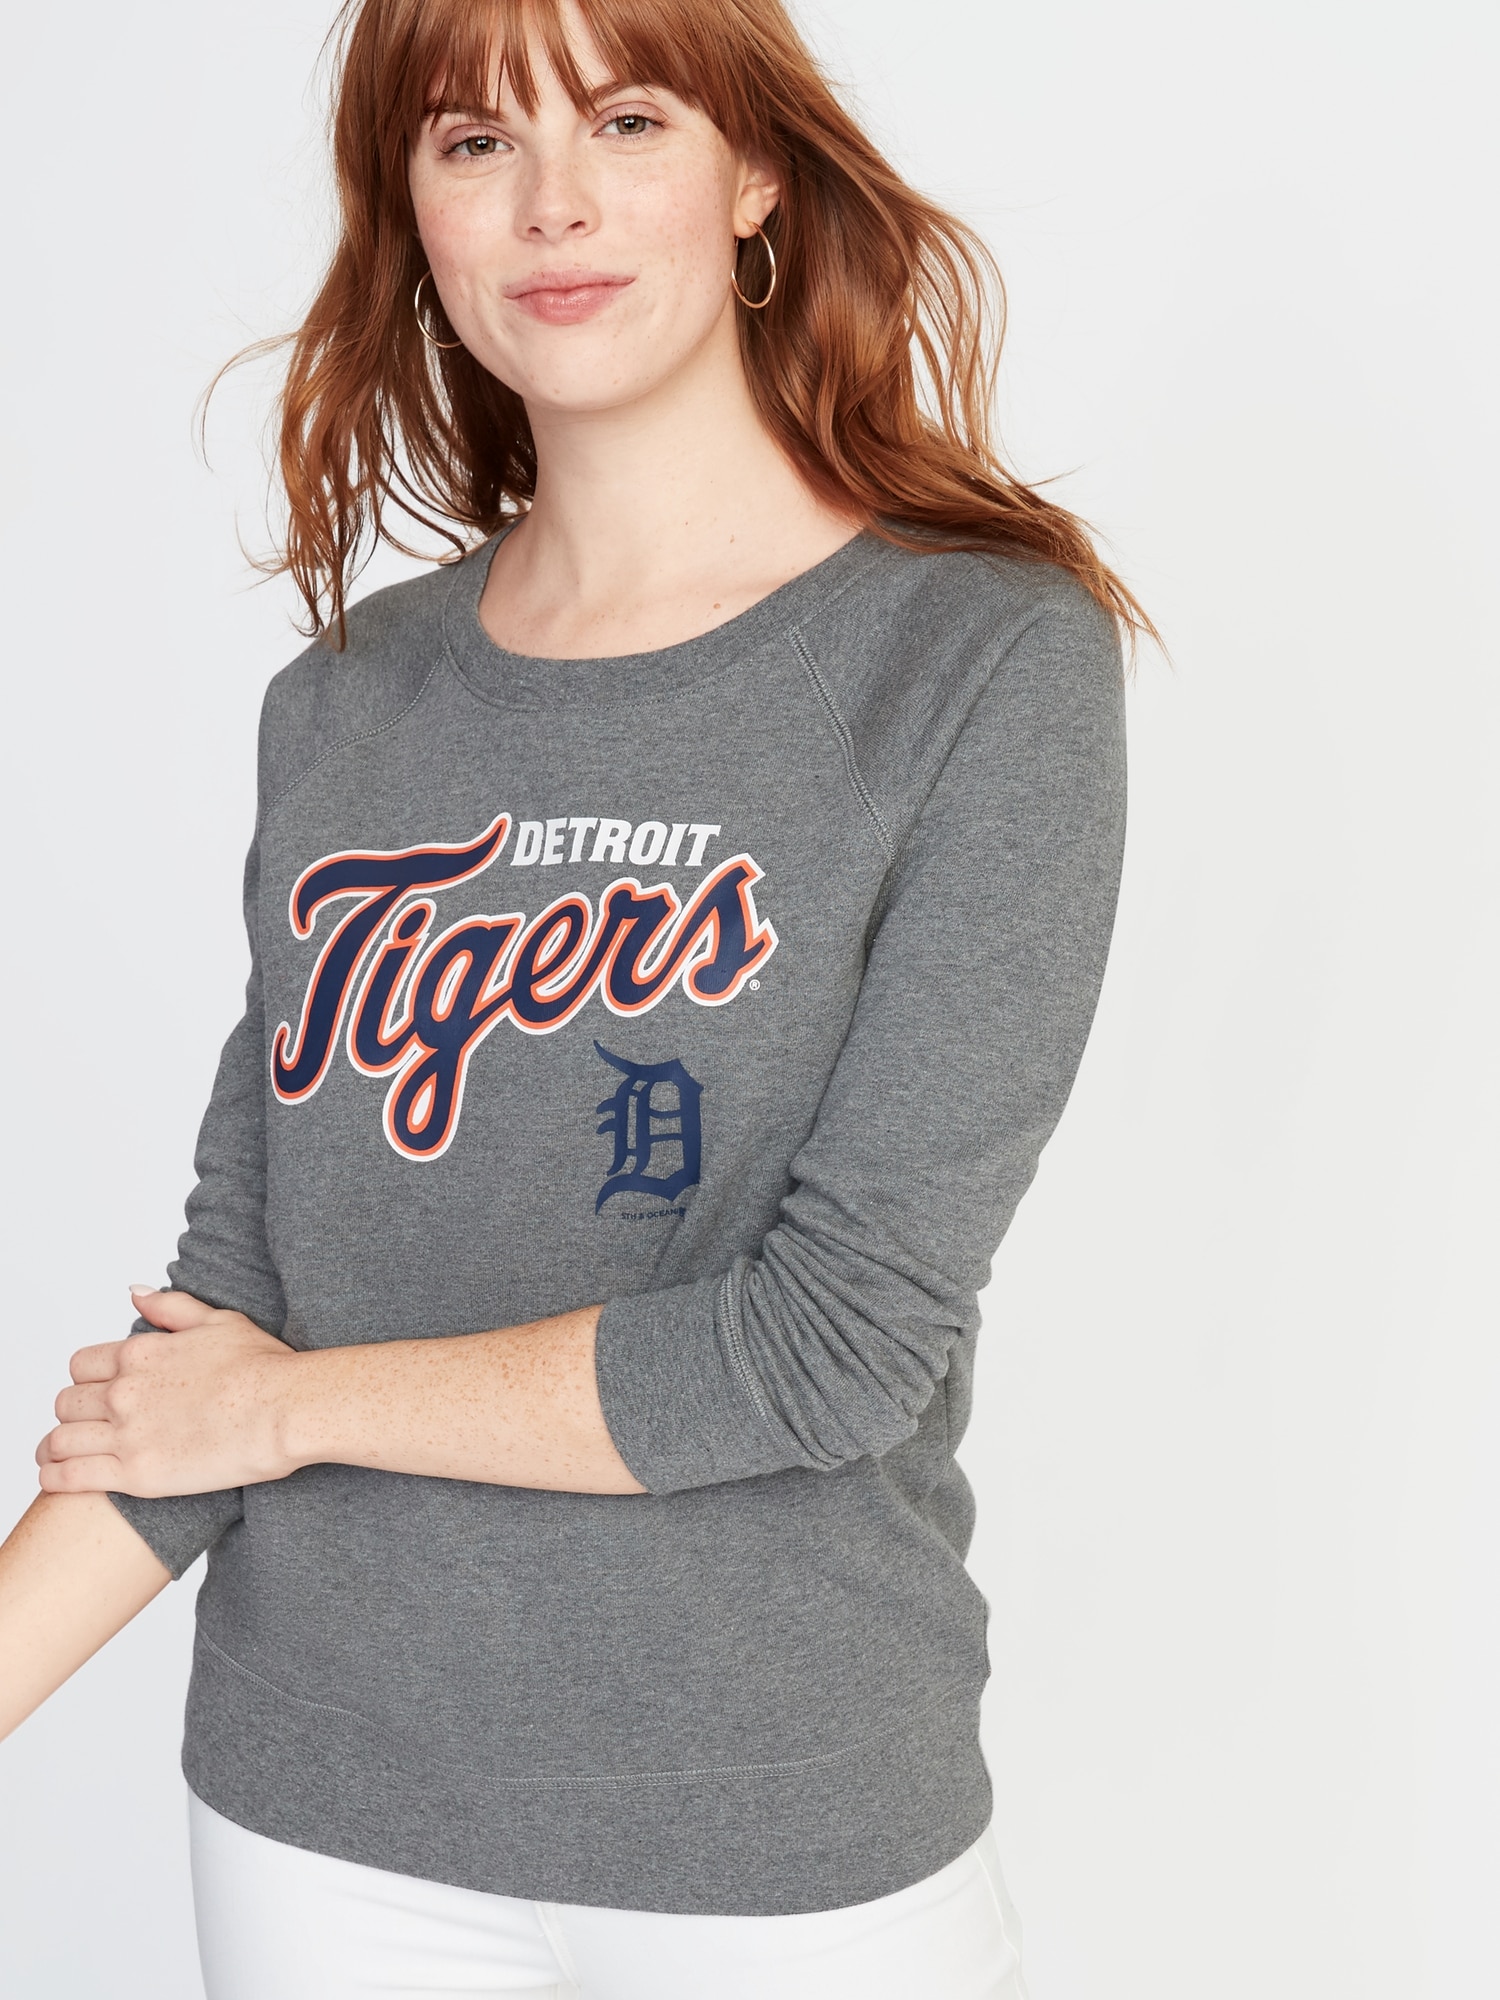 Los Angeles Dodgers Women's Big Logo Crew Neck Pullover Sweater